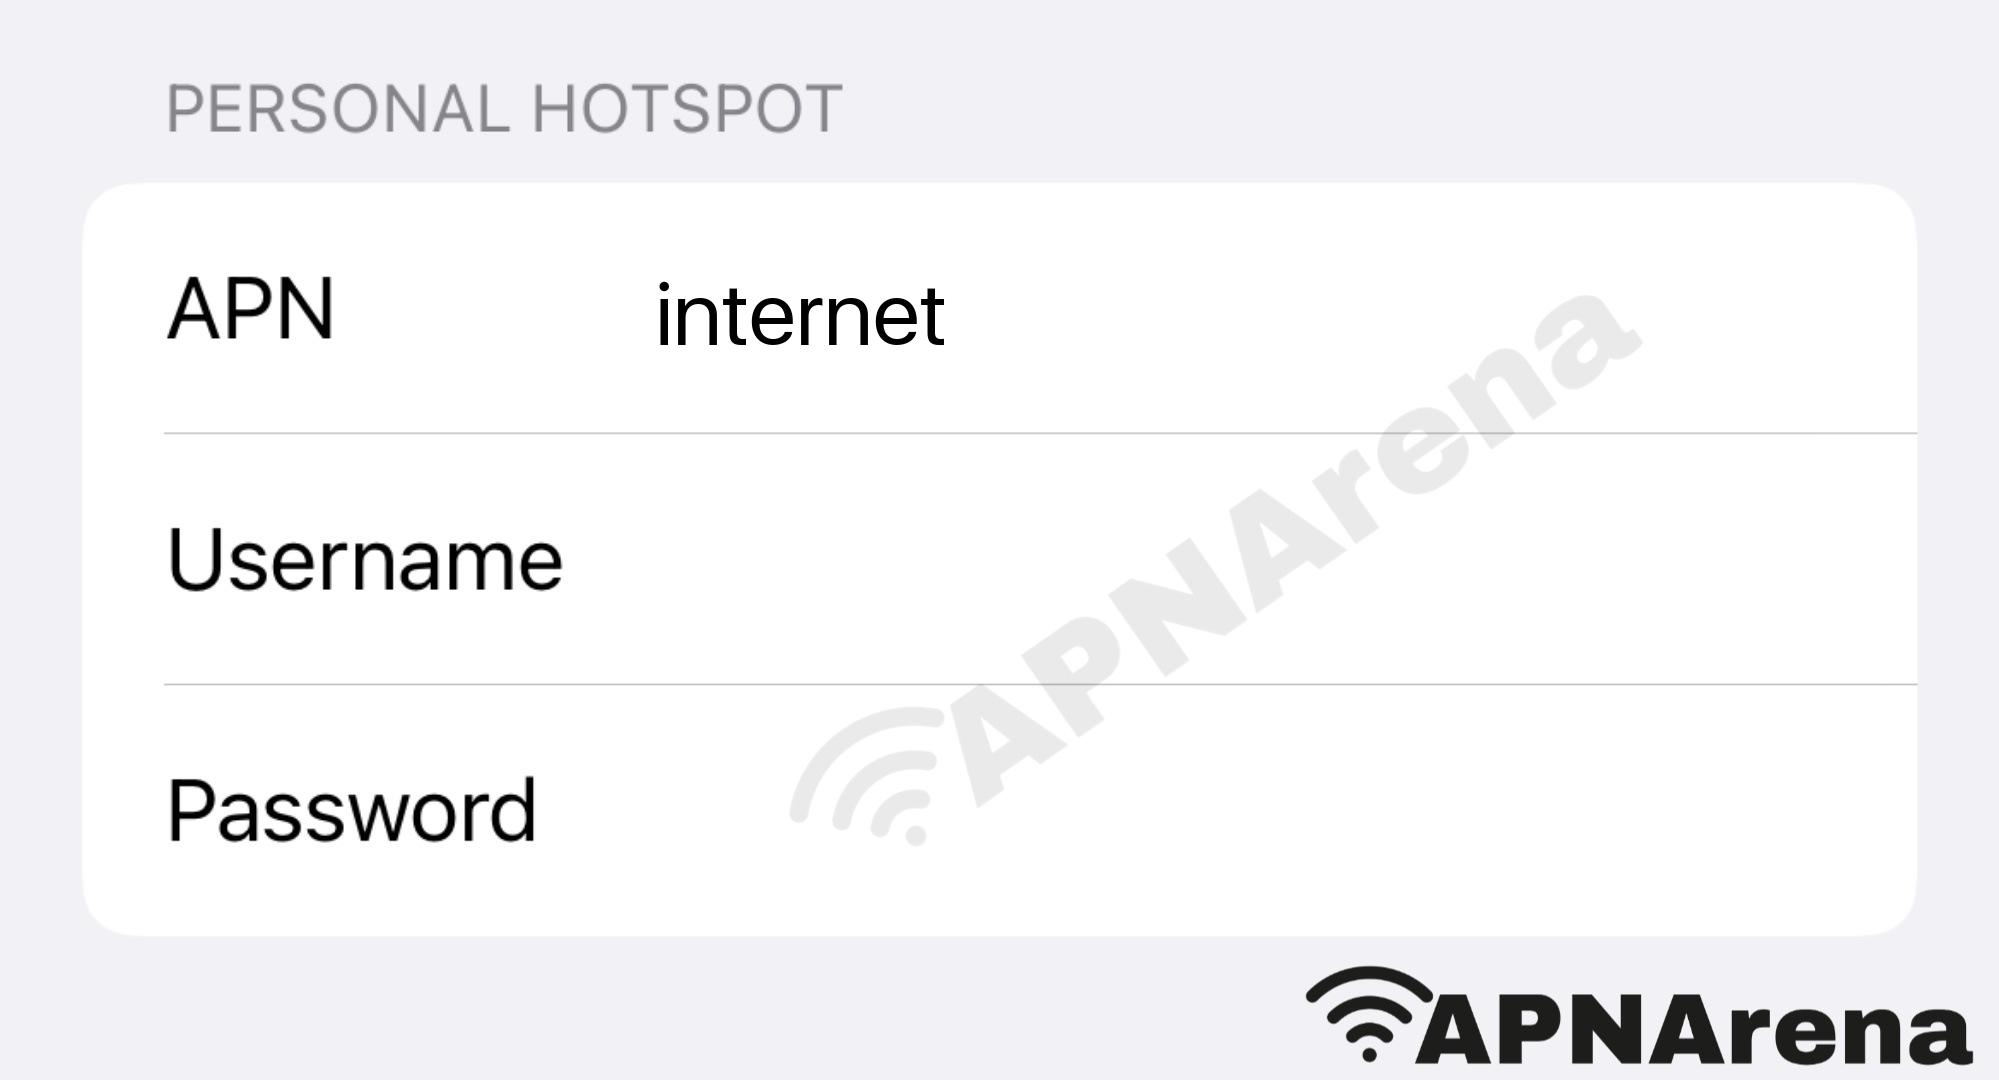 GloNet (4G) Personal Hotspot Settings for iPhone